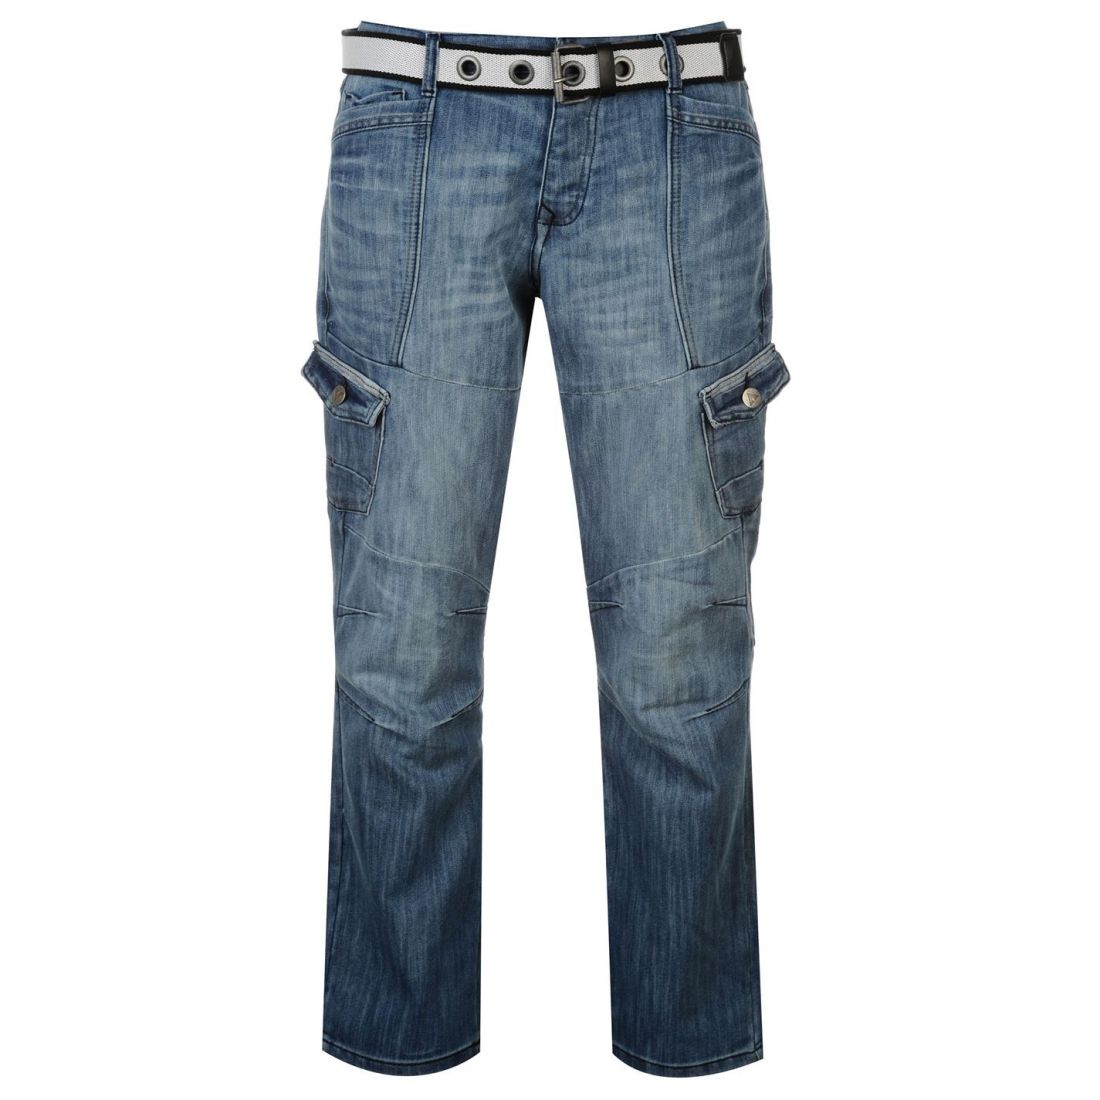 Airwalk Belted Cargo Jeans Straight Fit Belt 6 Pockets Denim Mens Gents ...